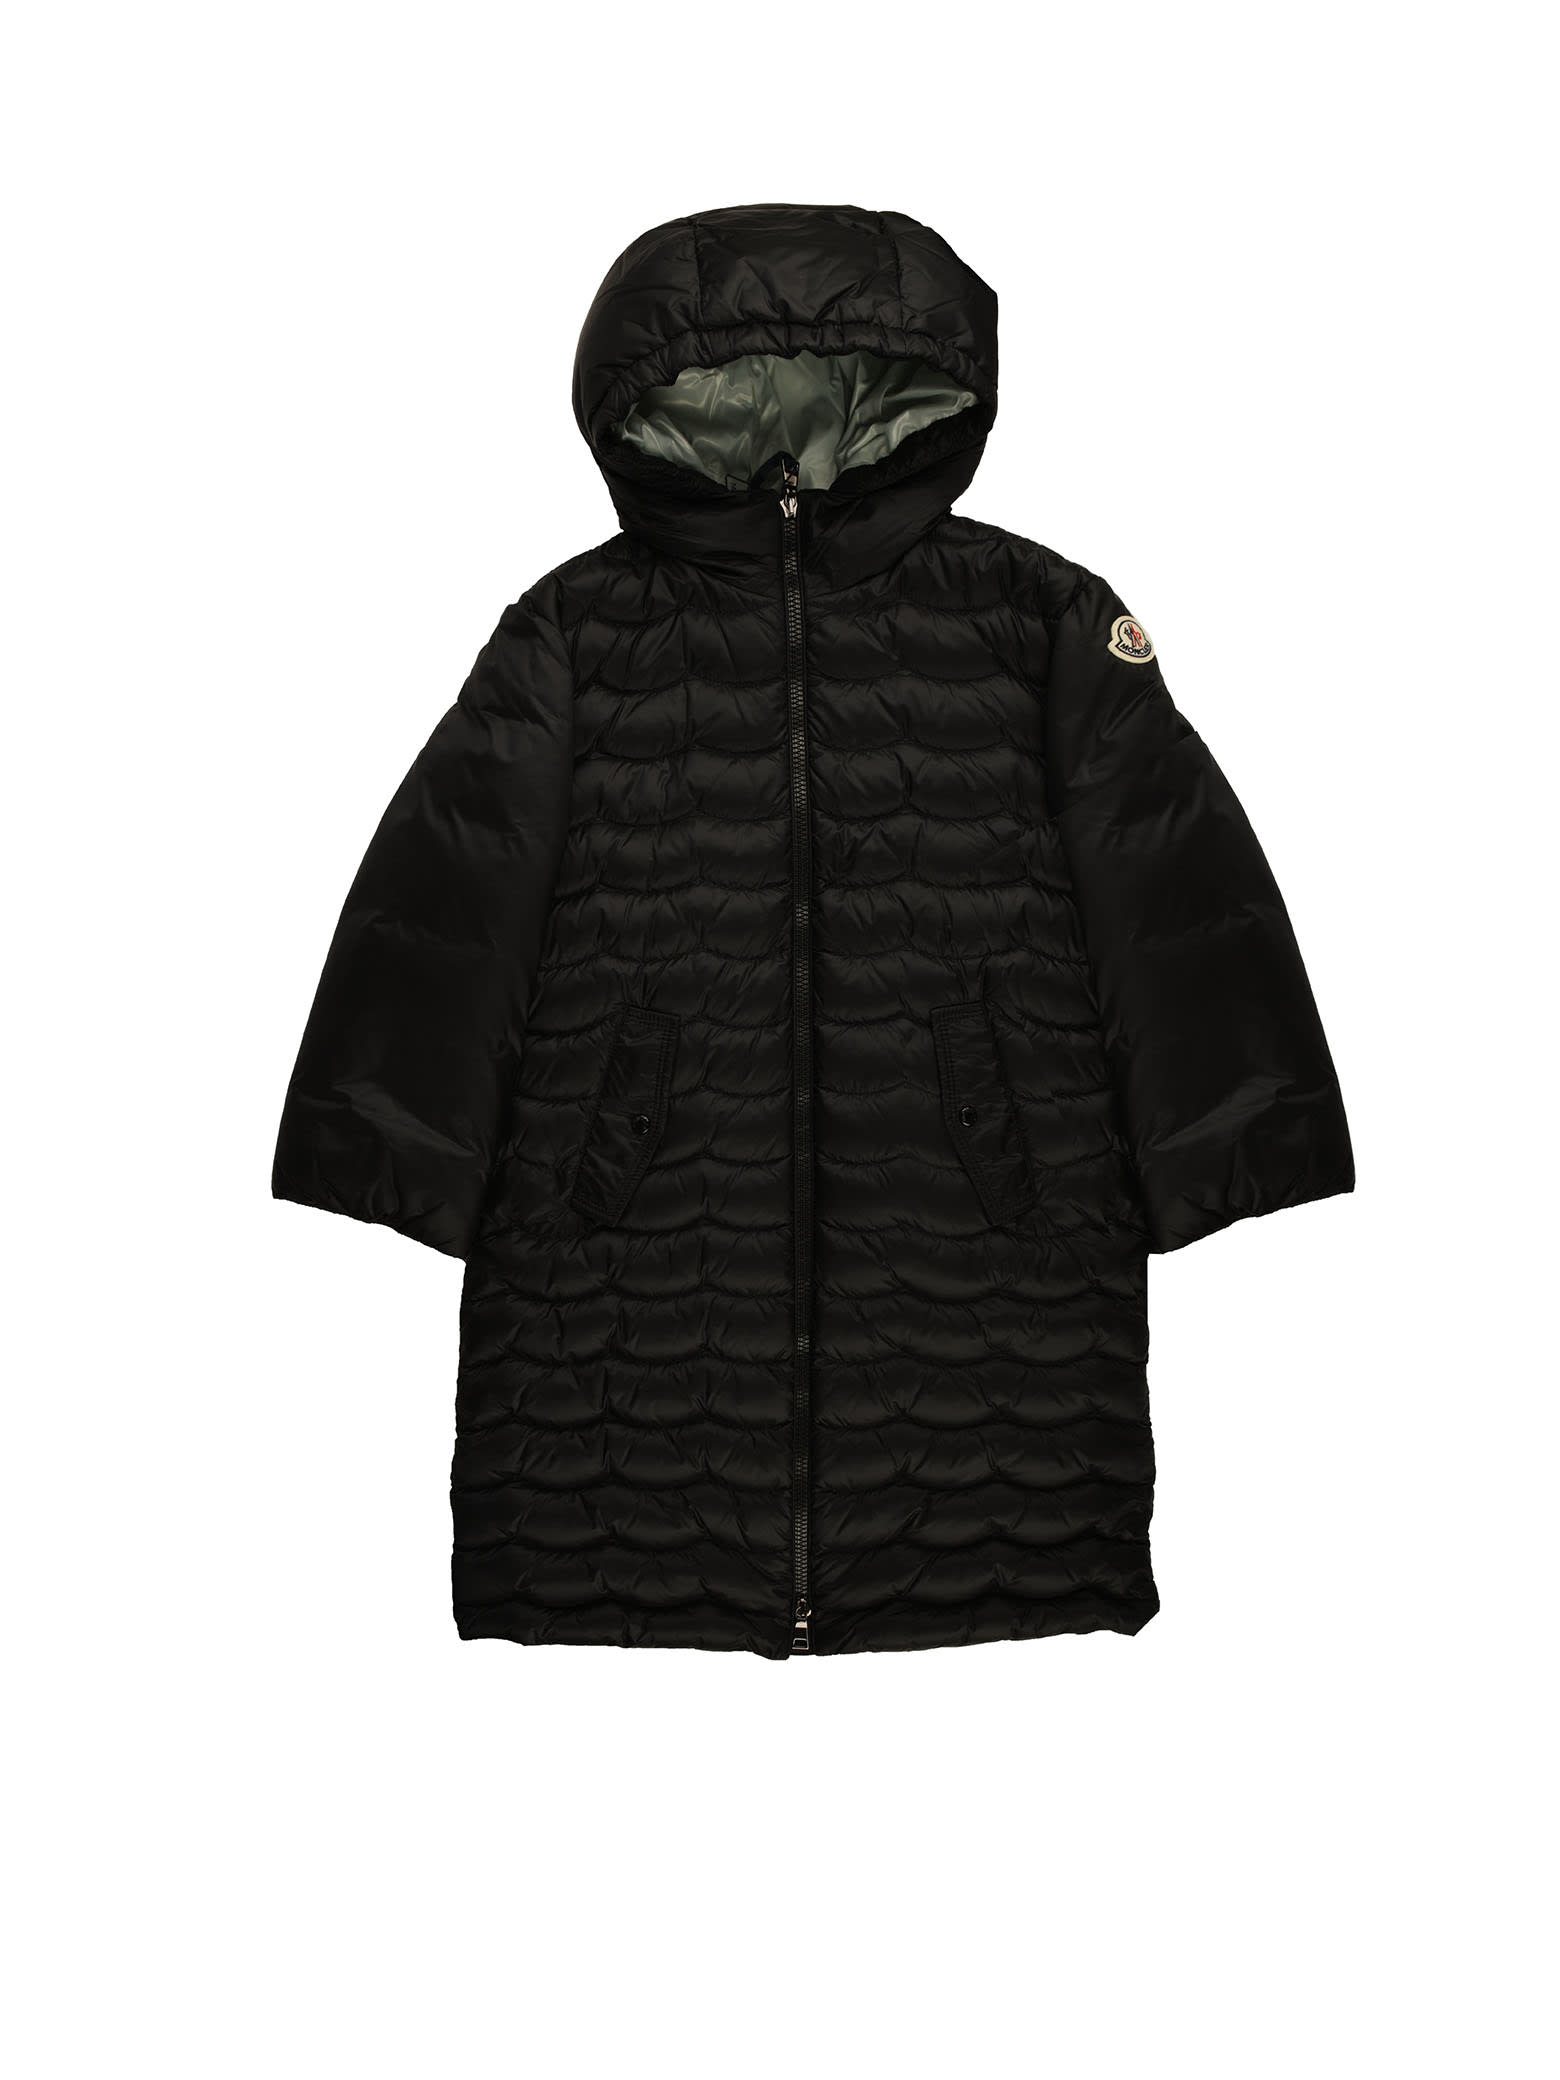 Moncler Long Black Jacket With Hood